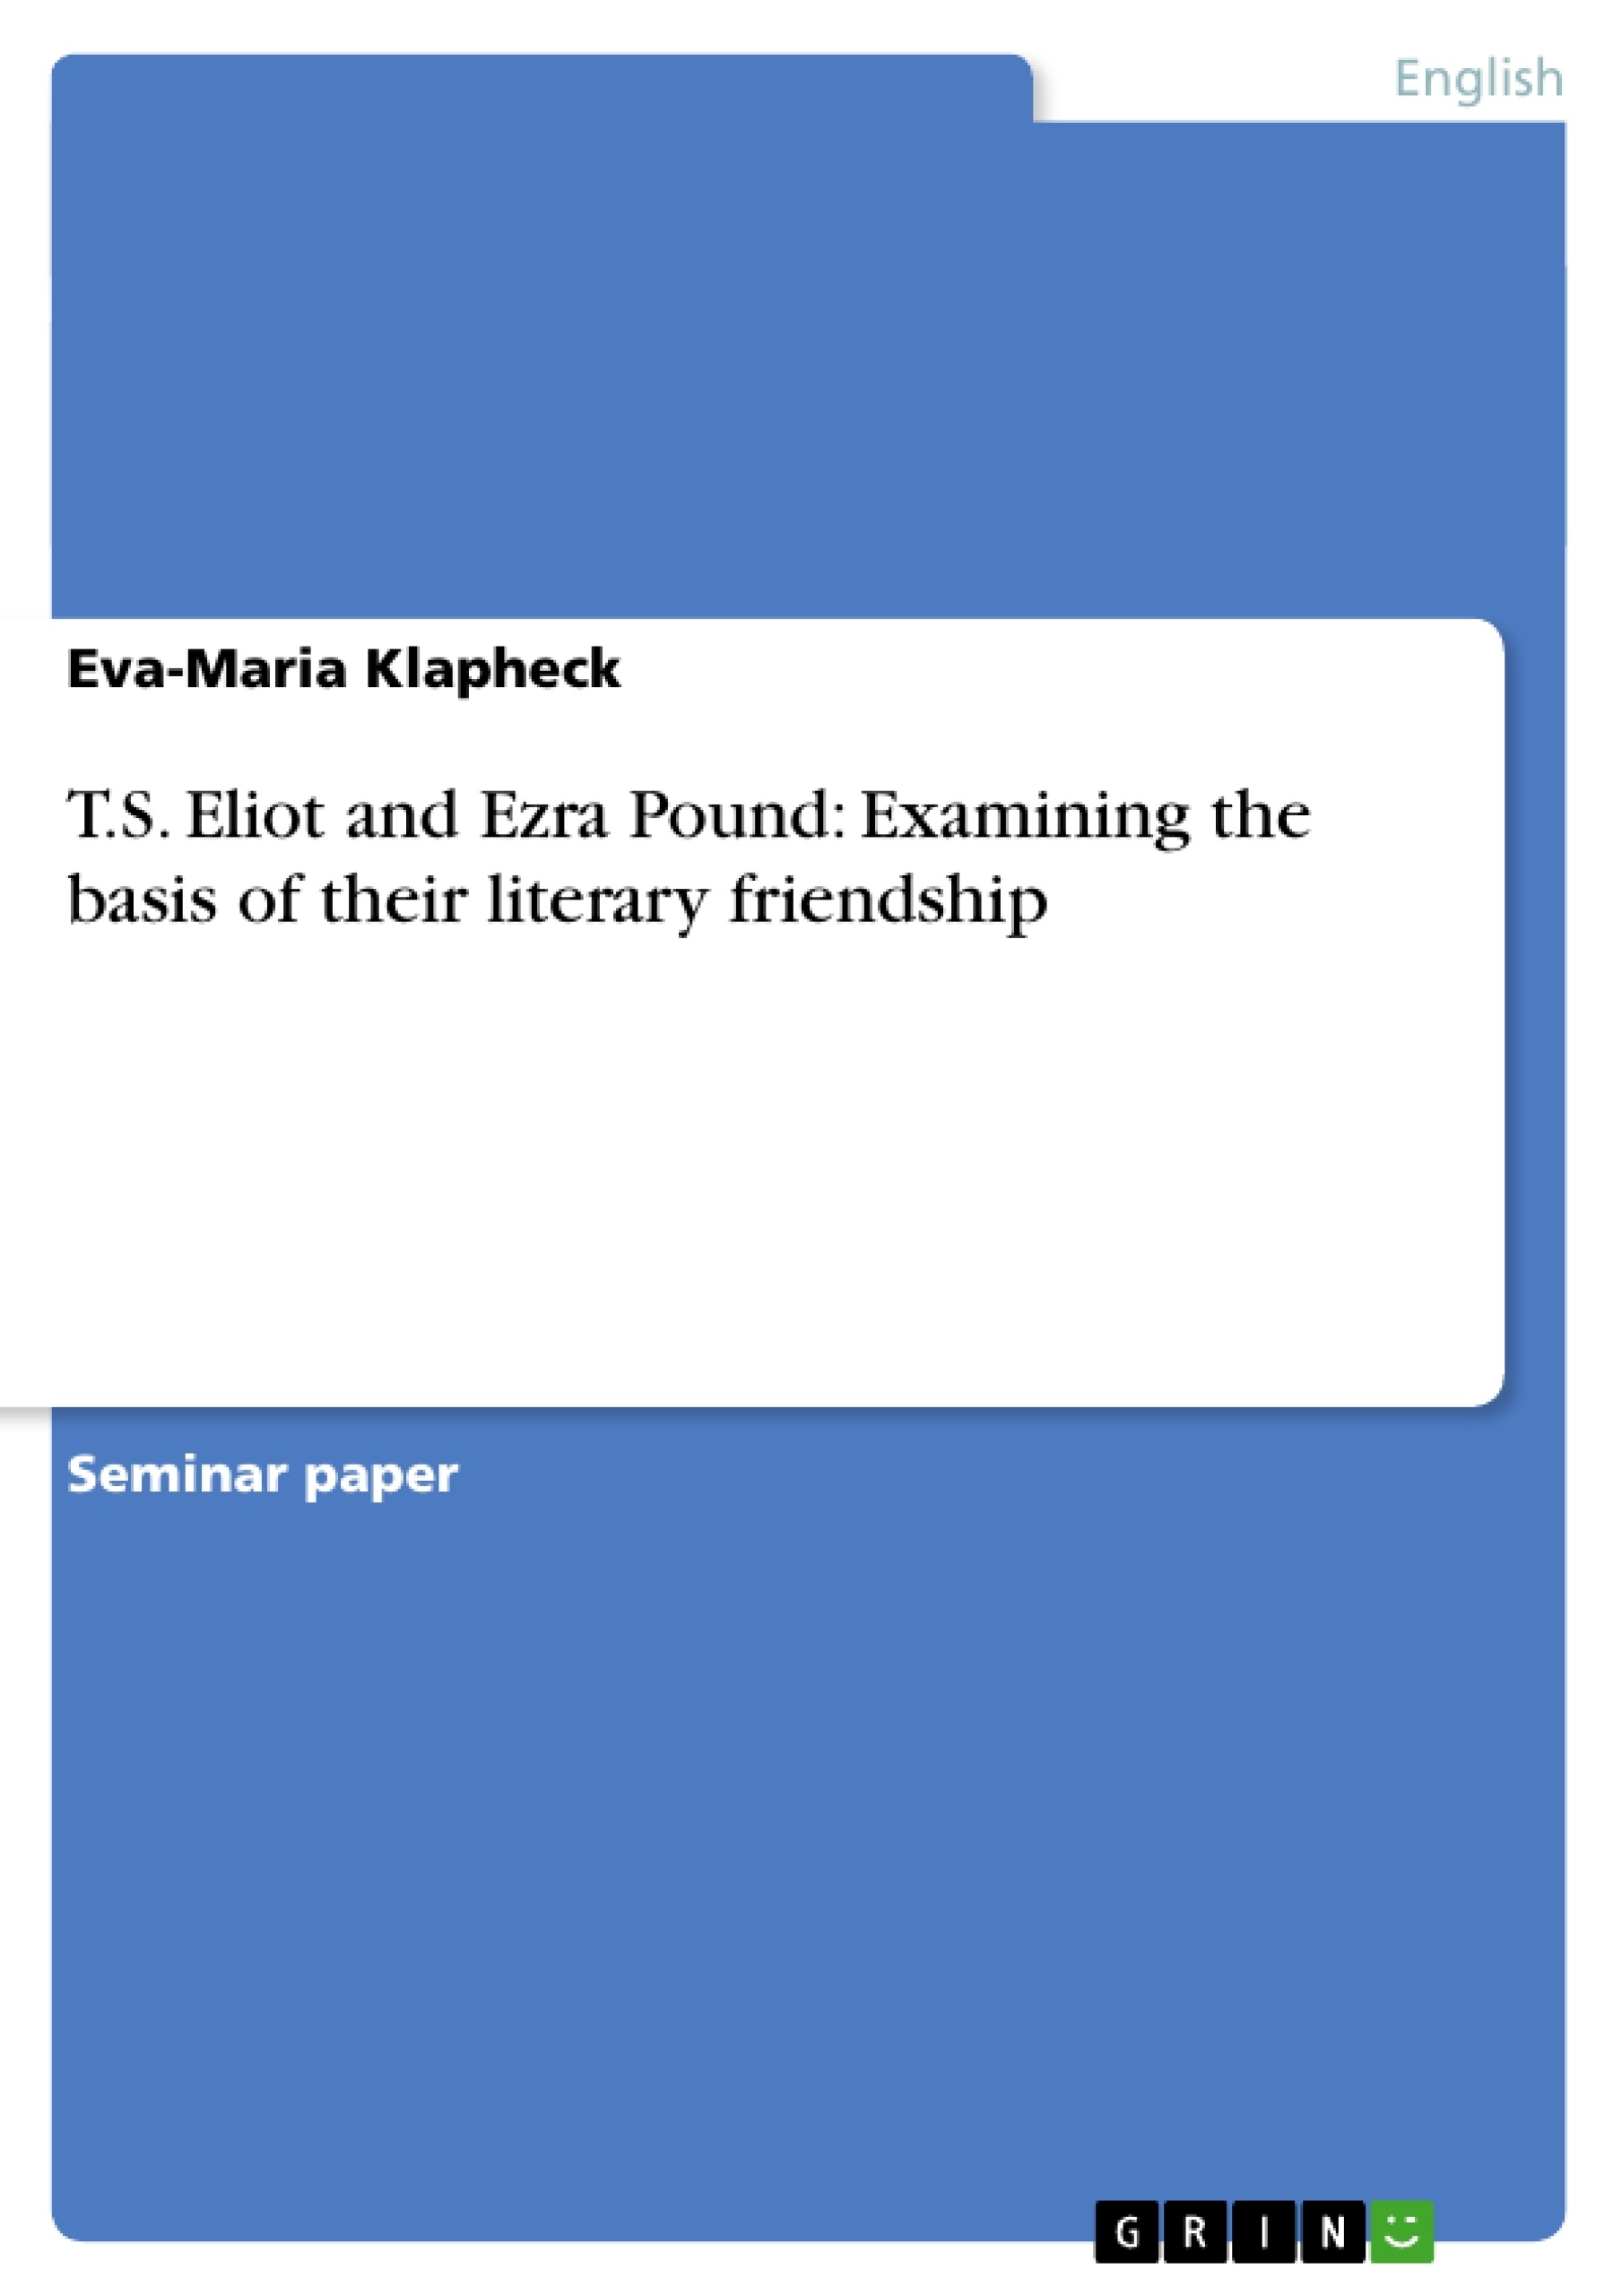 Título: T.S. Eliot and Ezra Pound: Examining the basis of their literary friendship